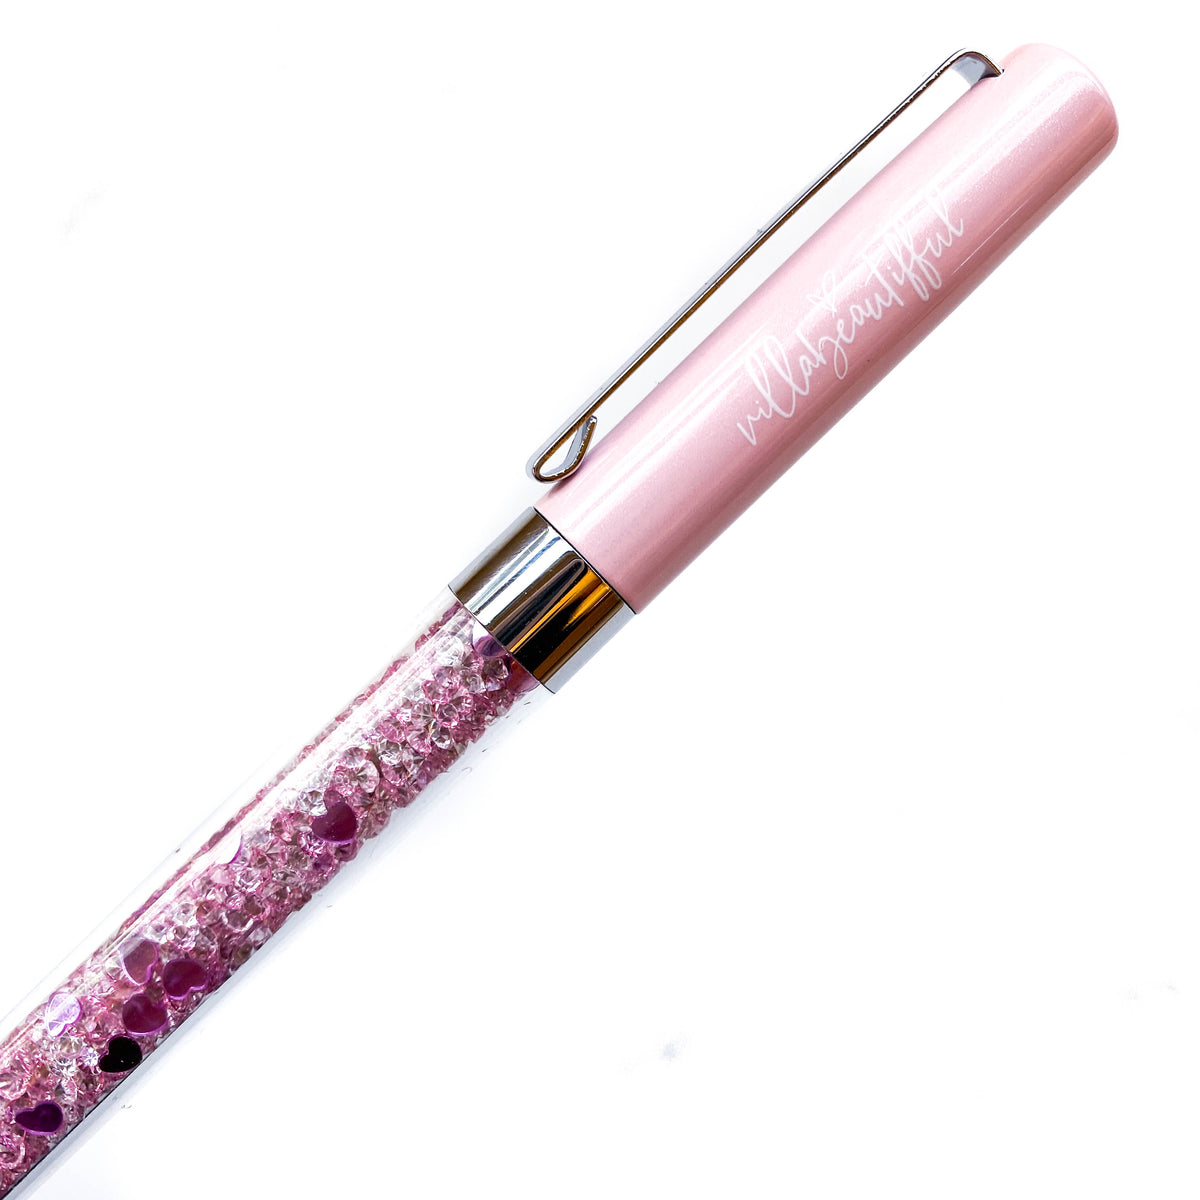 Color Me Pink Imperfect Crystal VBPen | limited pen